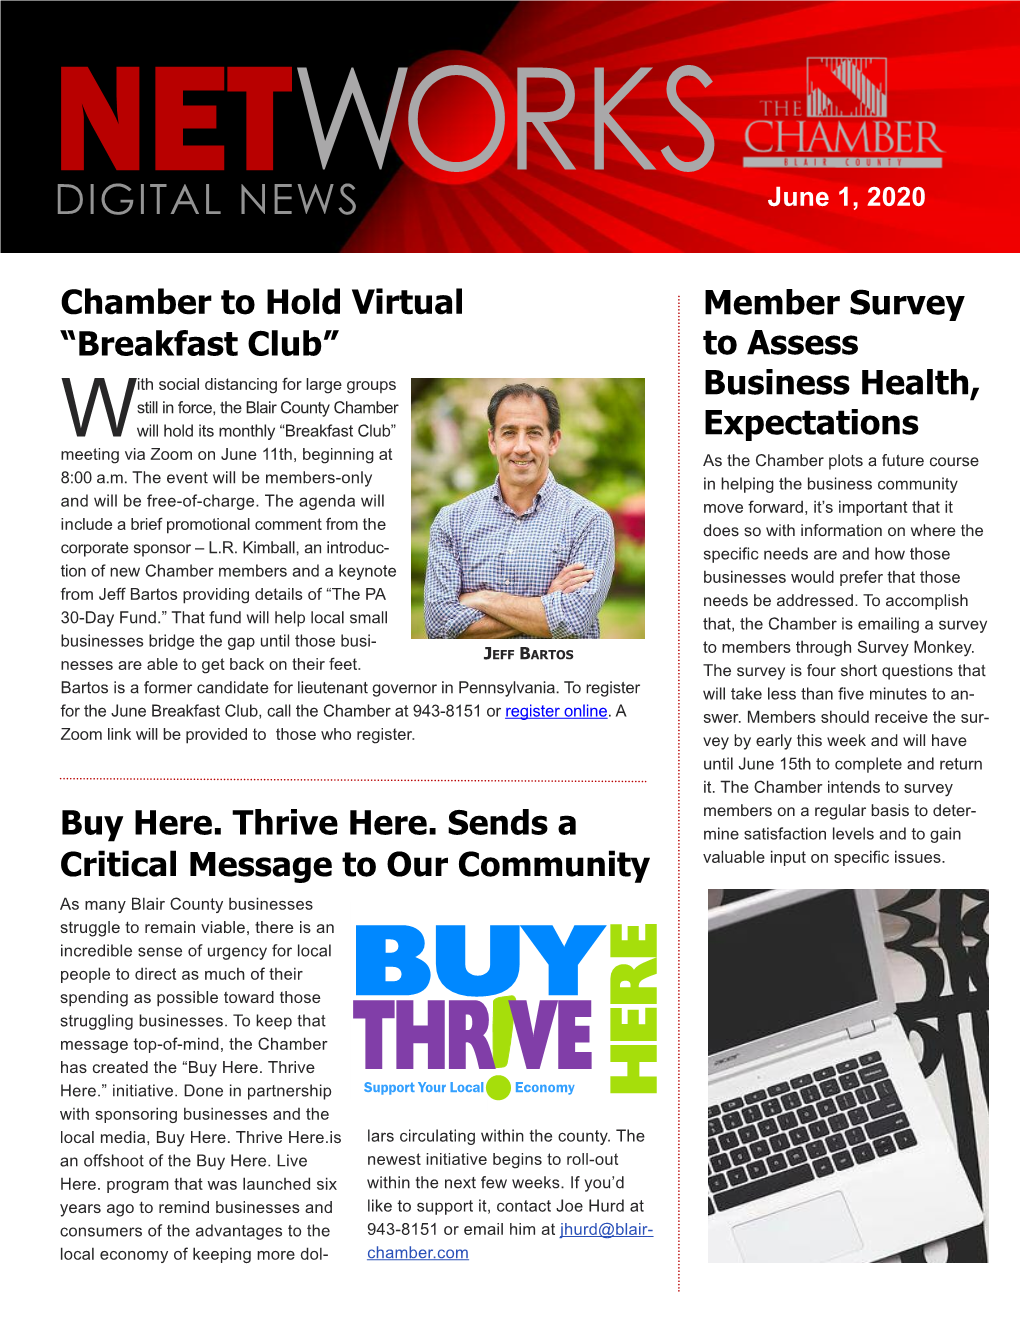 June 1, 2020 Networks Digital News